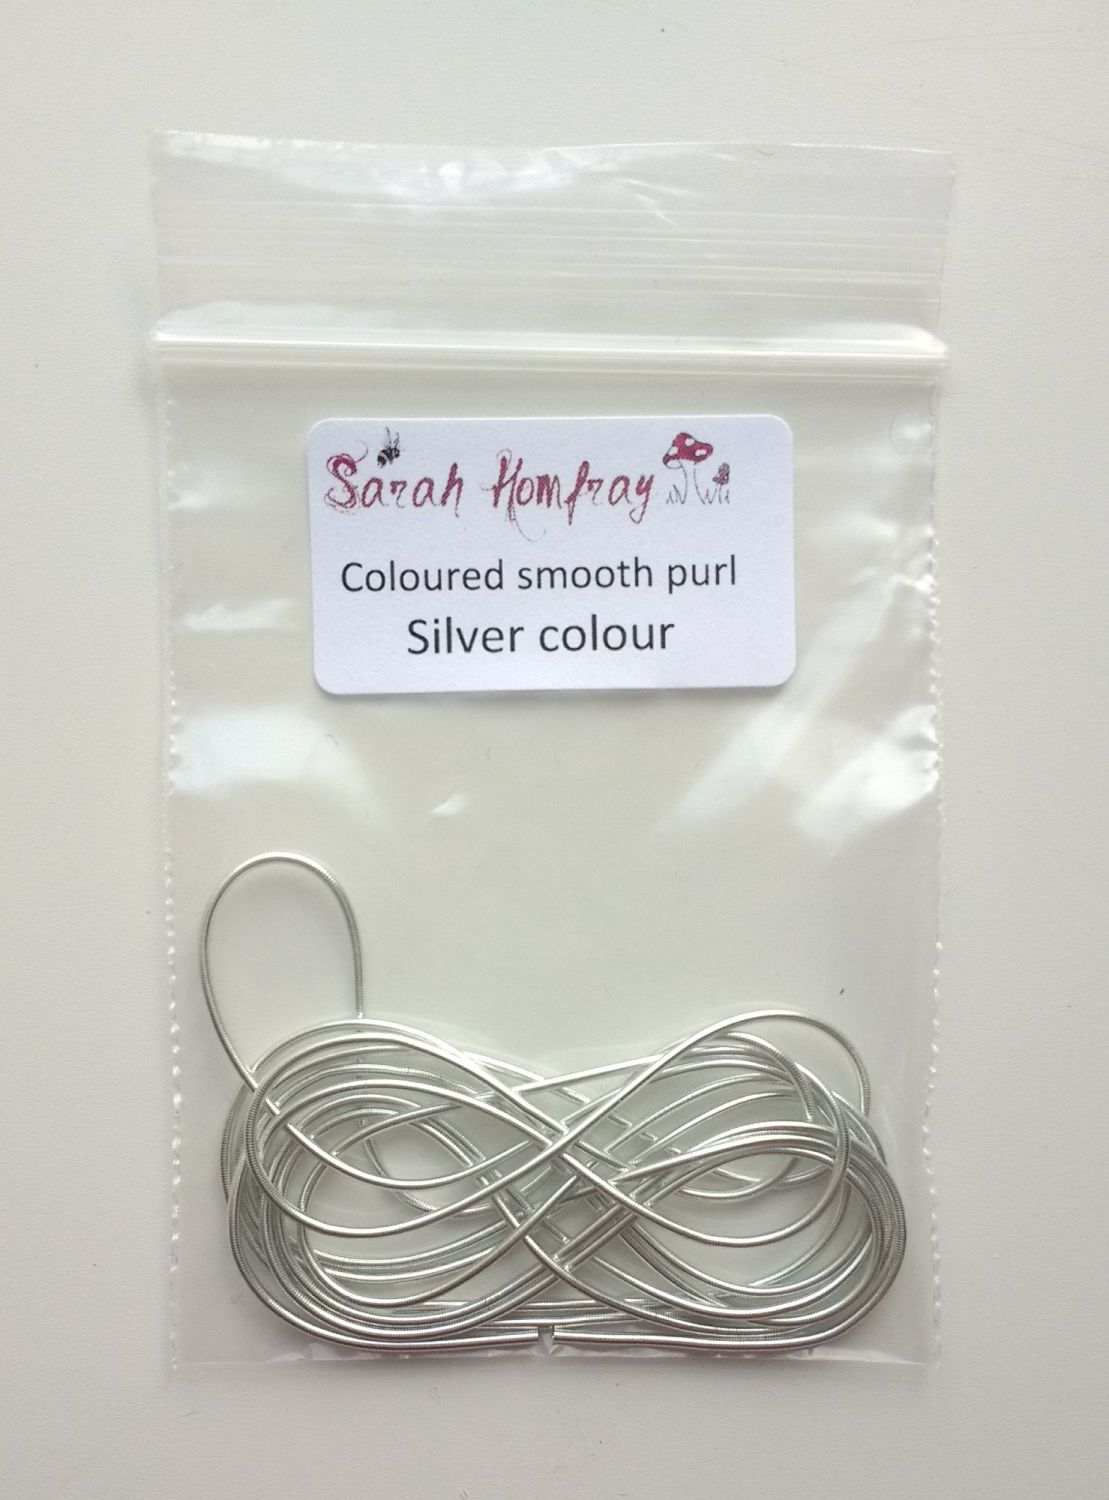 NEW! Coloured smooth purl no.6 - Silver colour